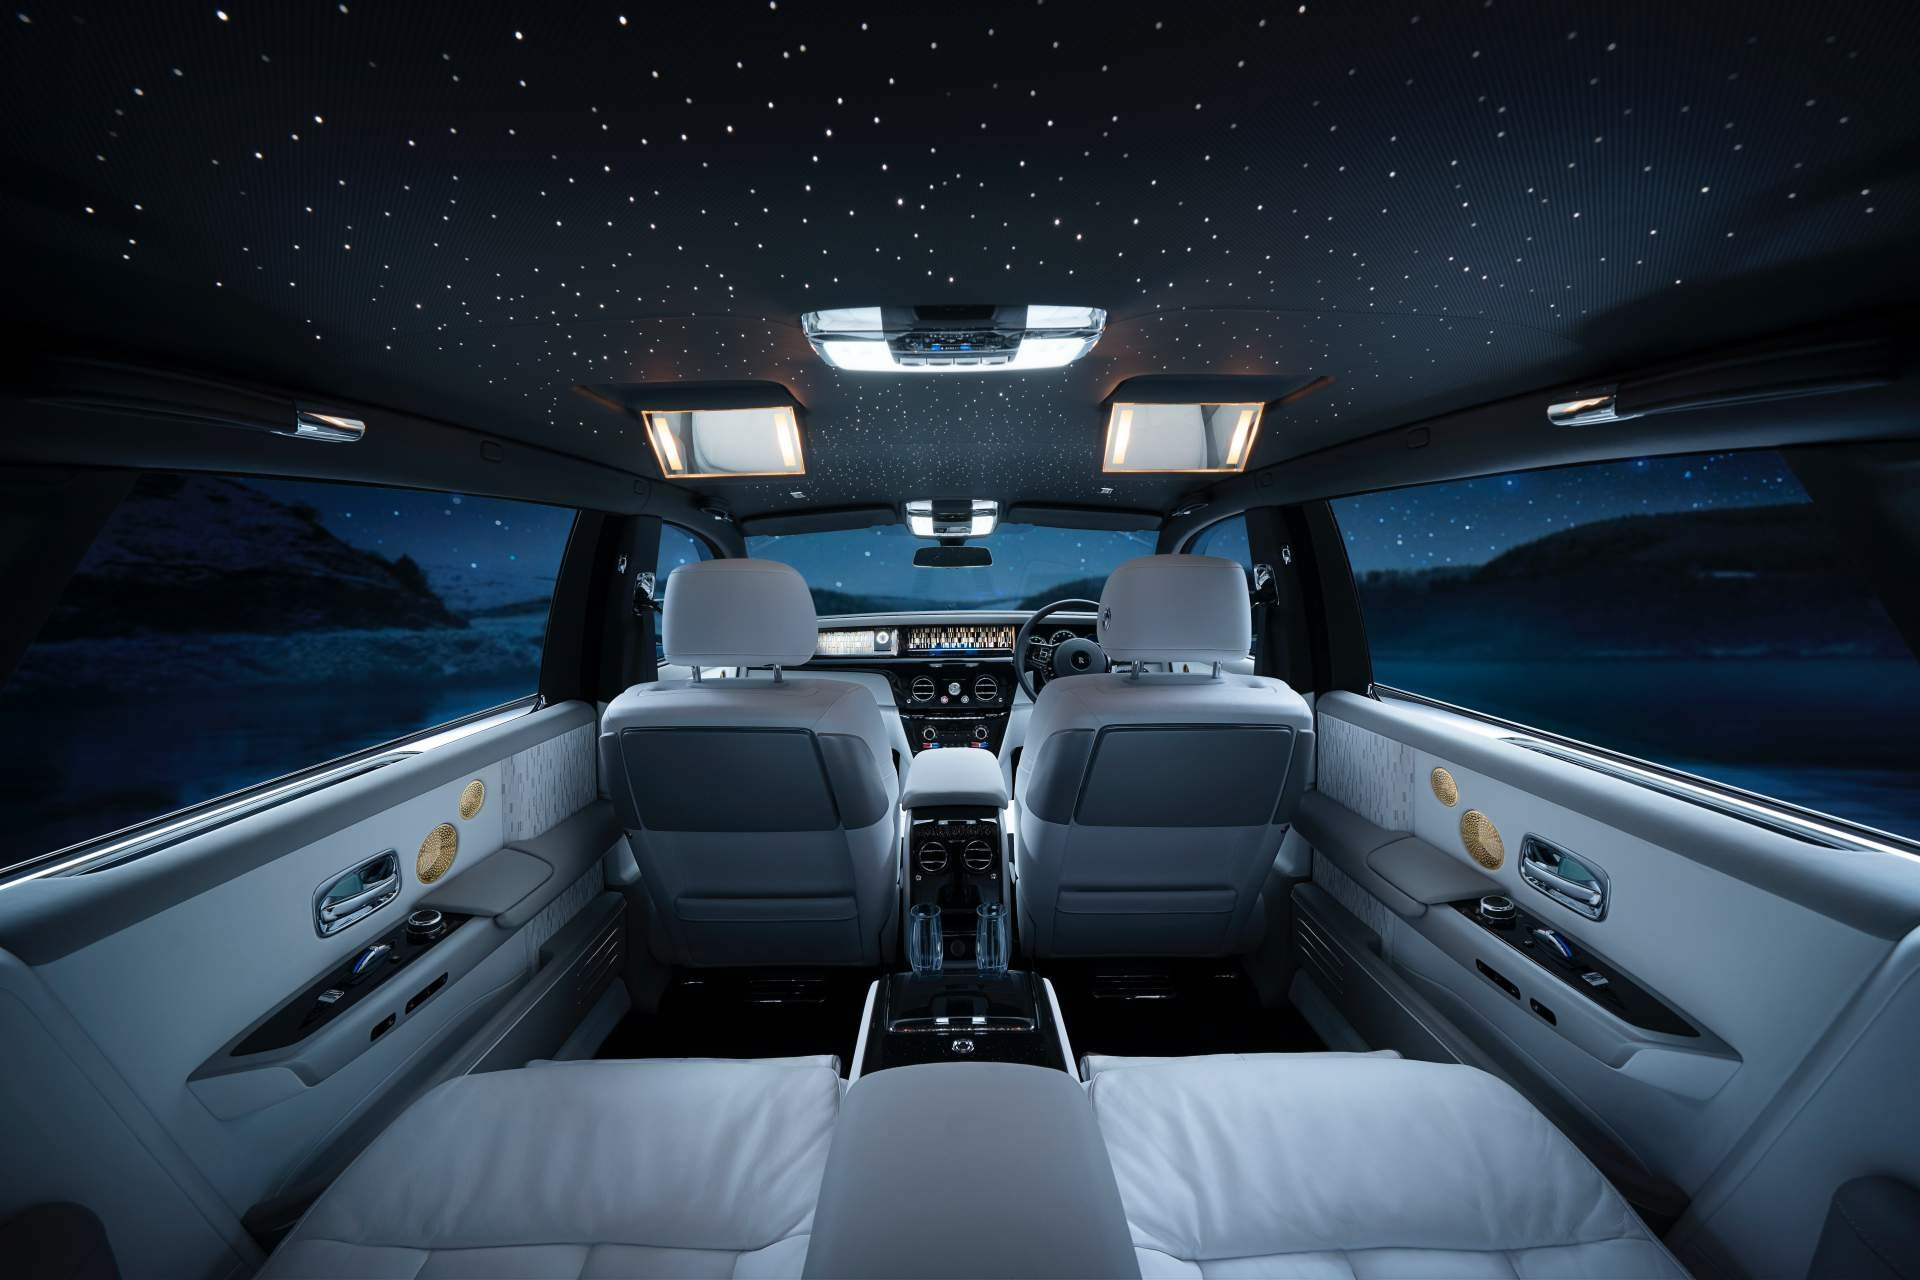 2019 Rolls Royce Phantom Tranquillity interior, Luxury and serenity, Automotive opulence, Impeccable craftsmanship, 1920x1280 HD Desktop